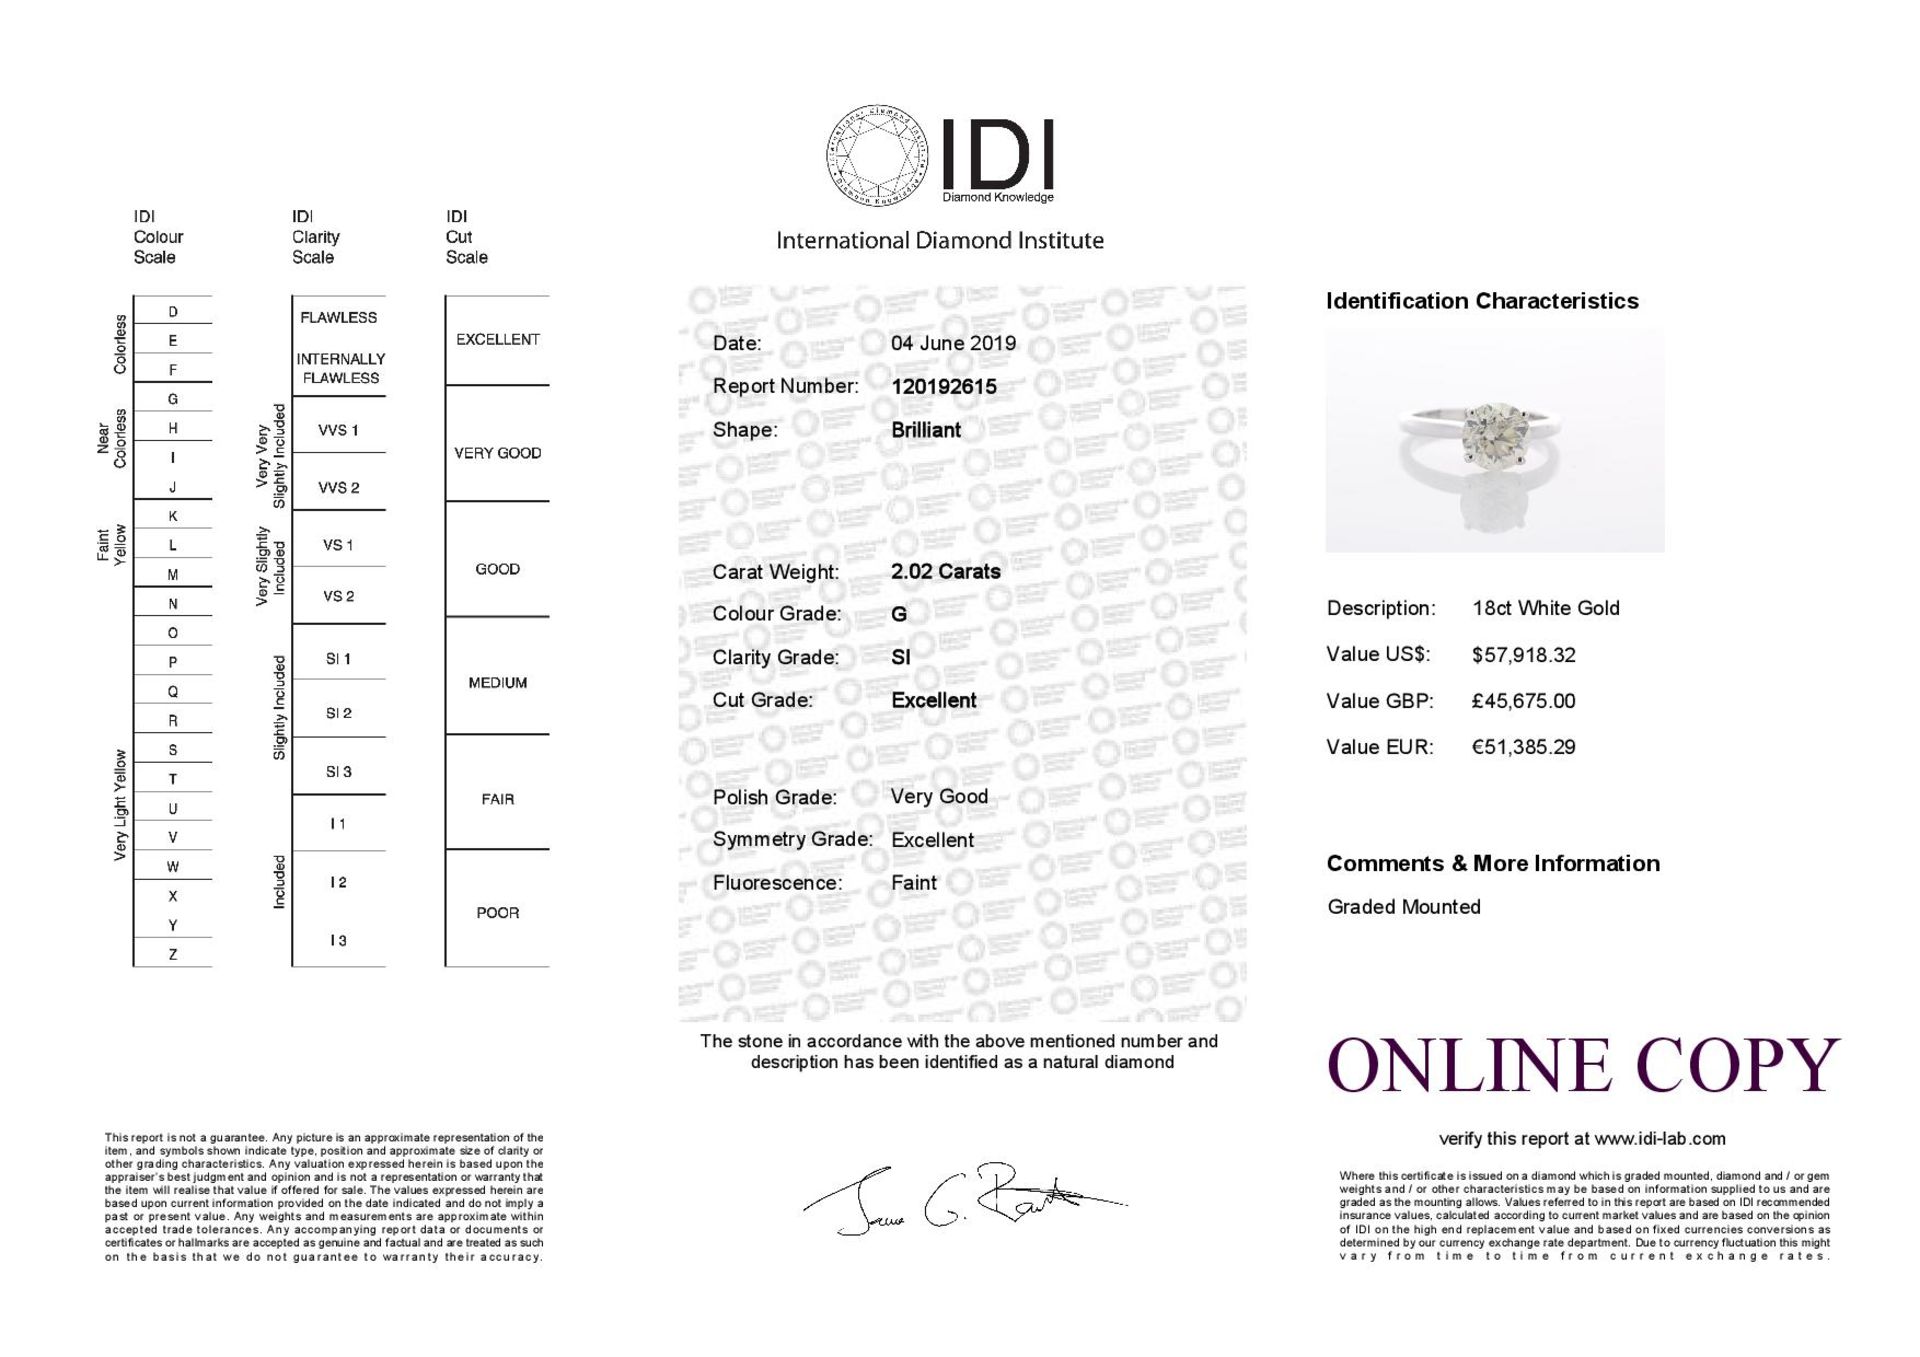 18ct White Gold Single Stone Prong Set Diamond Ring 2.02 Carats - Valued by IDI £45,675.00 - 18ct - Image 5 of 5